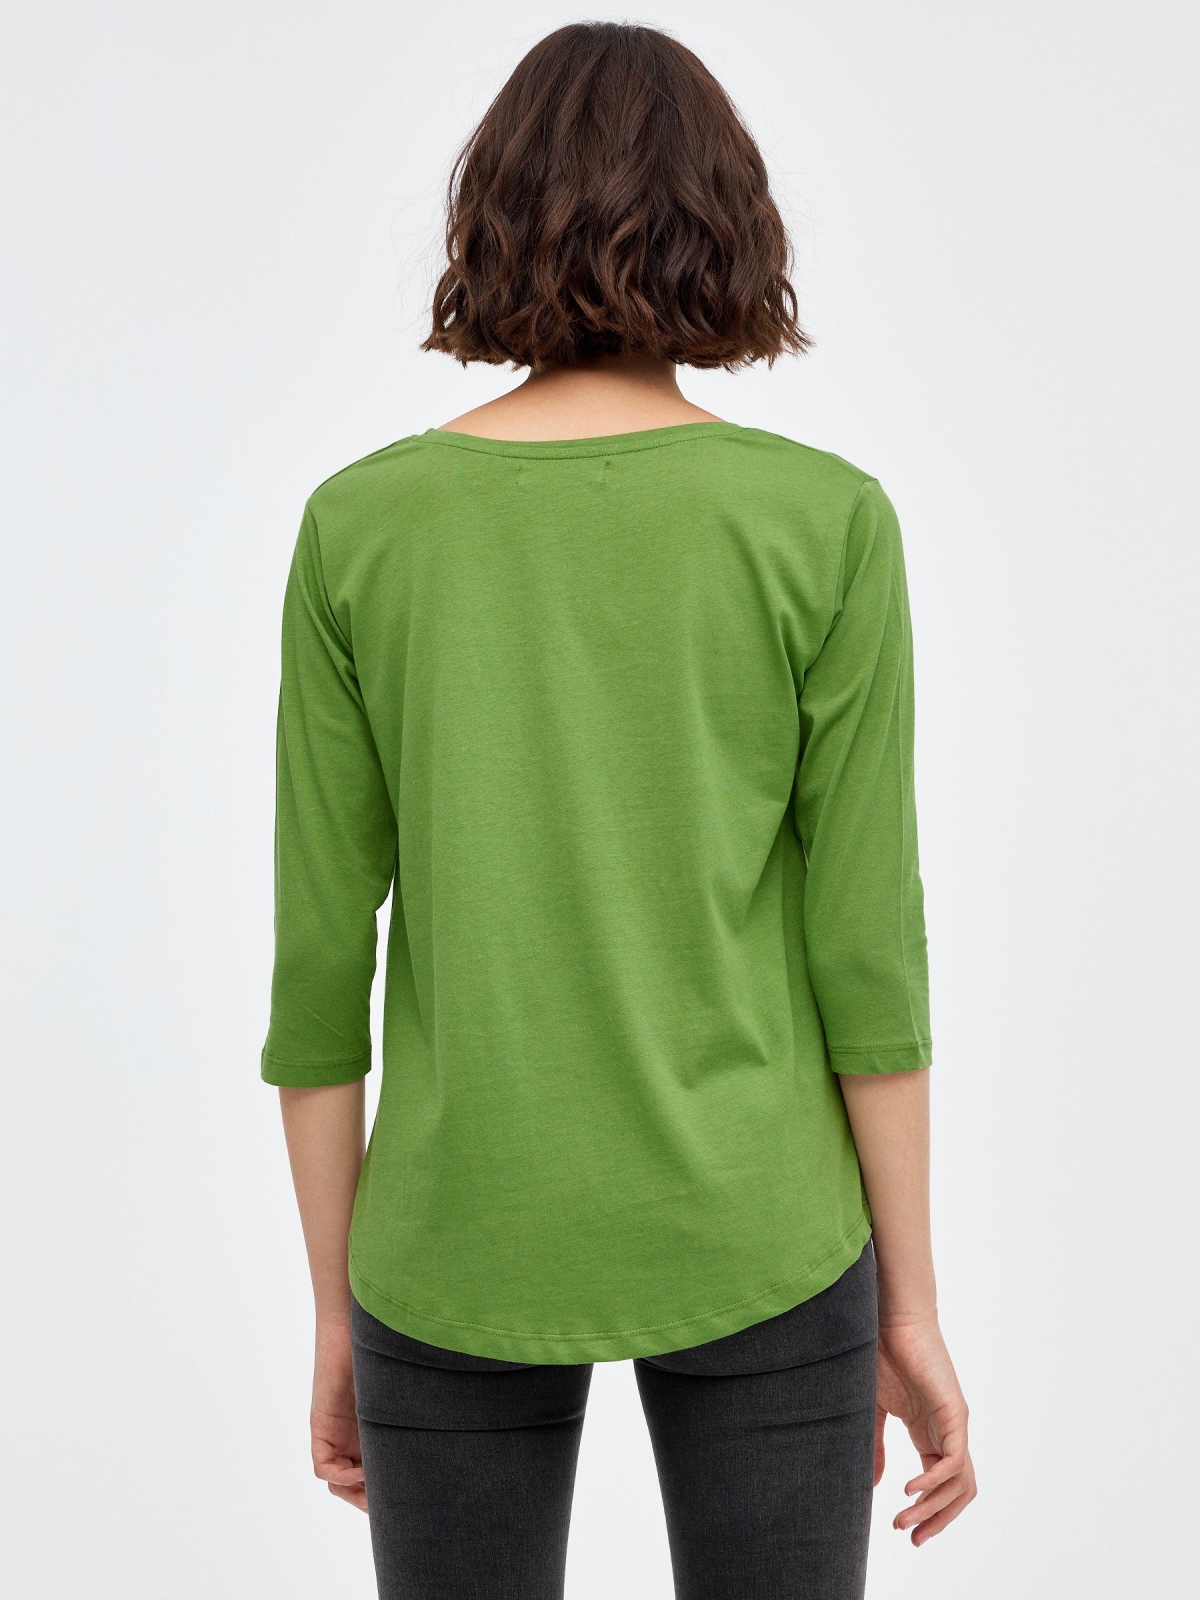 T-shirt ambiental verde oliva vista meia traseira